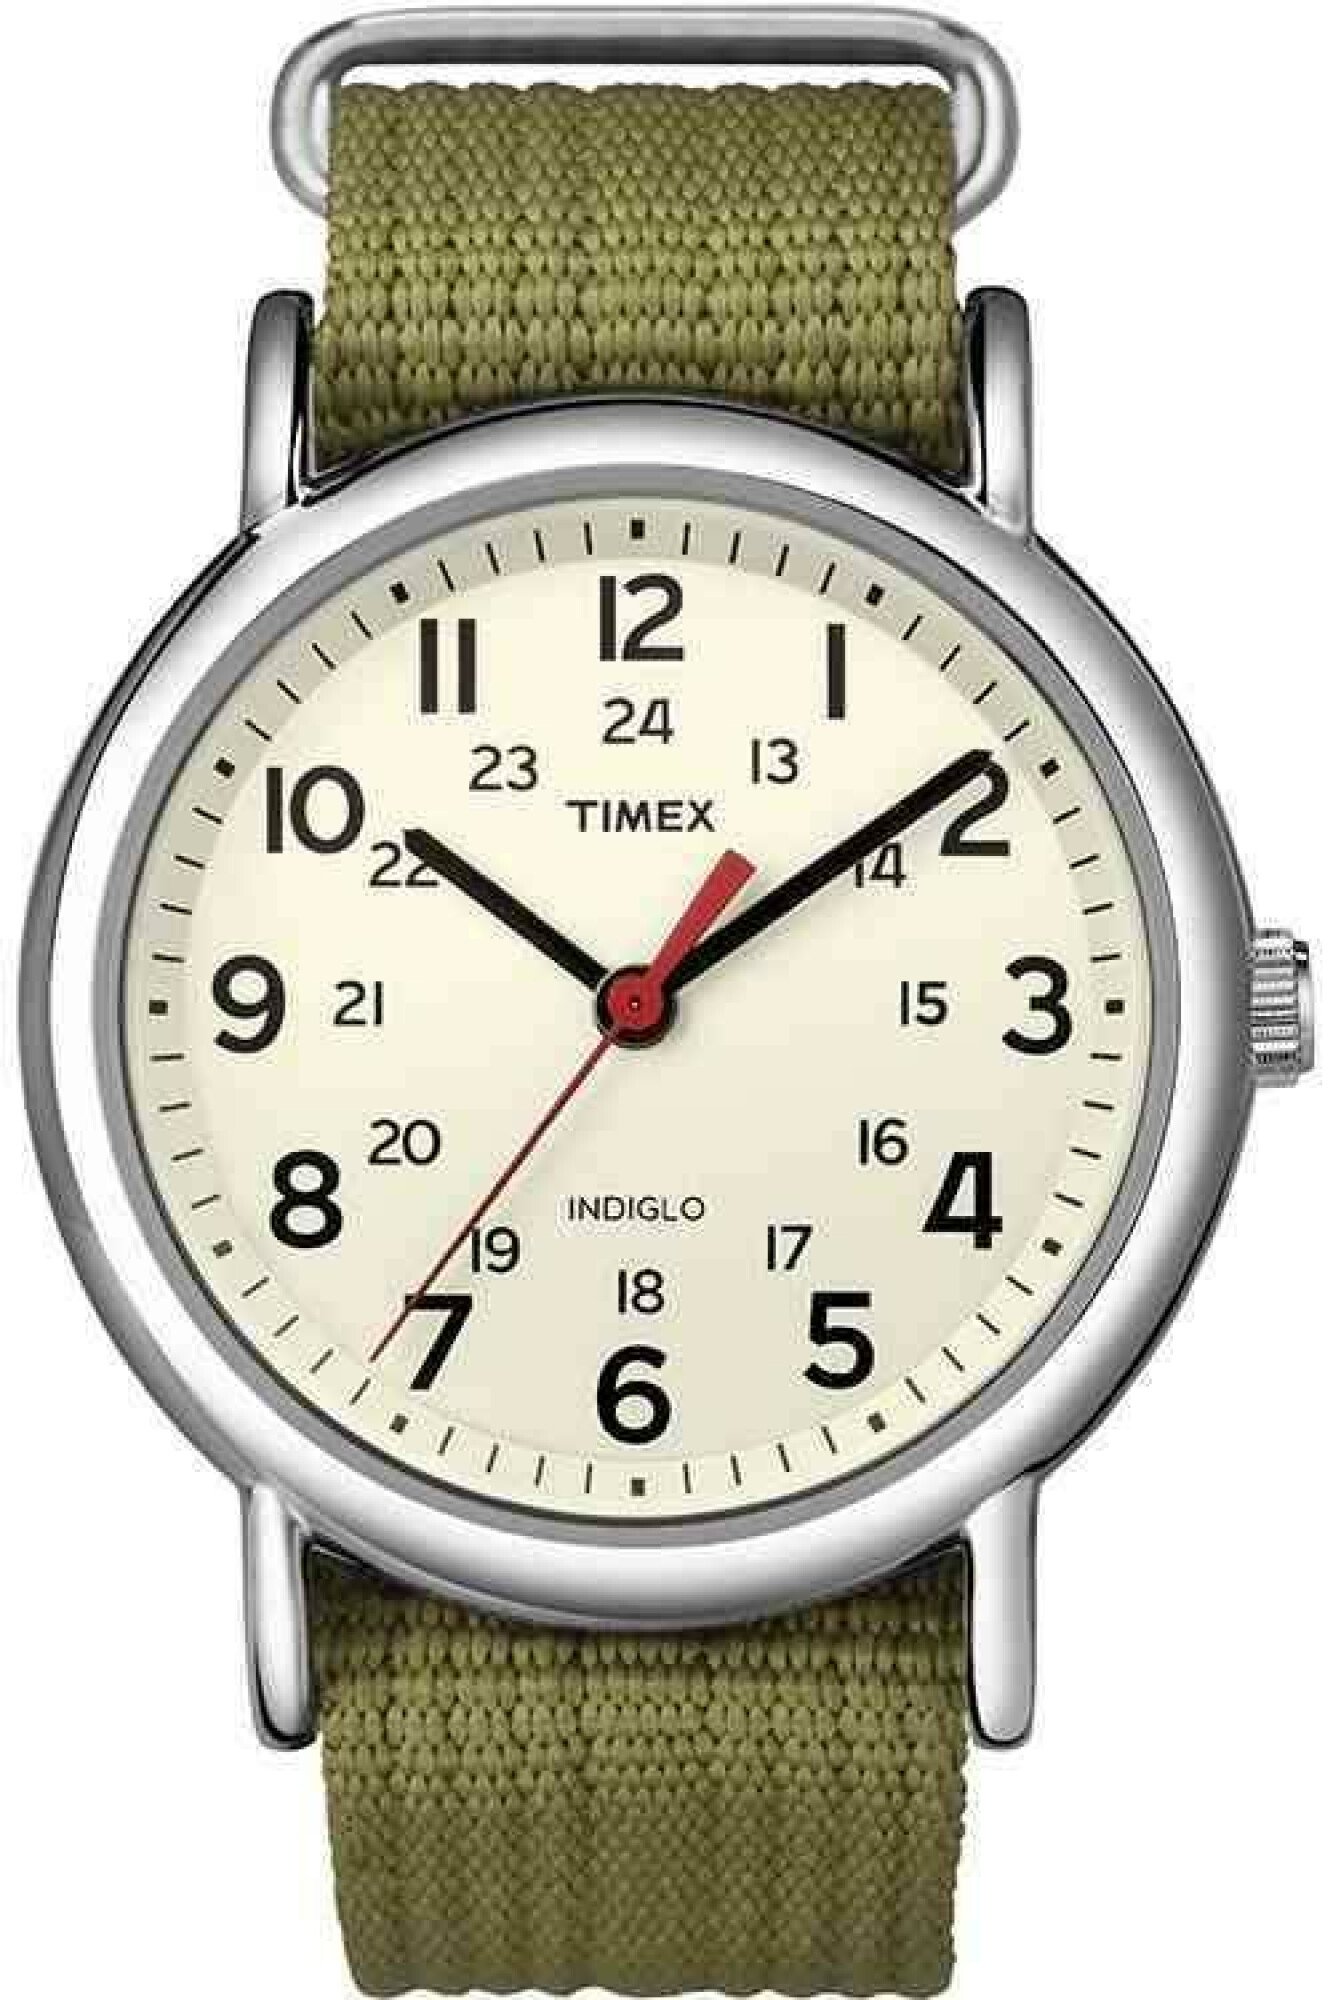 Timex Men's Weekender T2N651 White Nylon Analog Quartz Fashion Watch - image 1 of 2